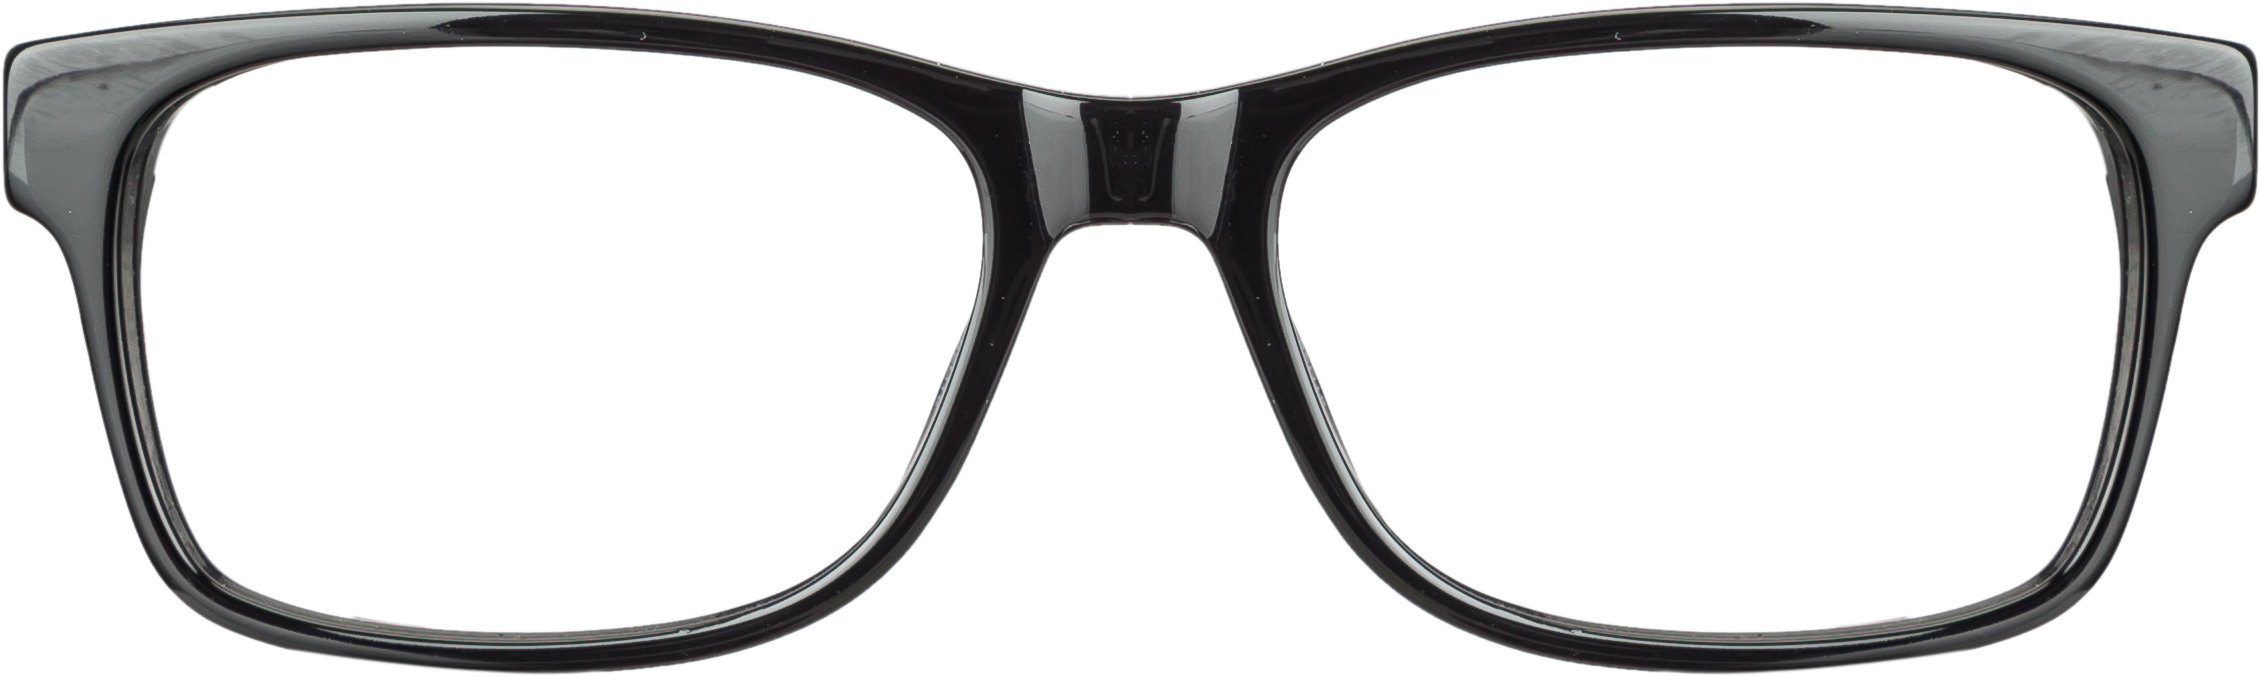 Lens Goggles Sunglasses Glasses Contact Free PNG HQ Clipart